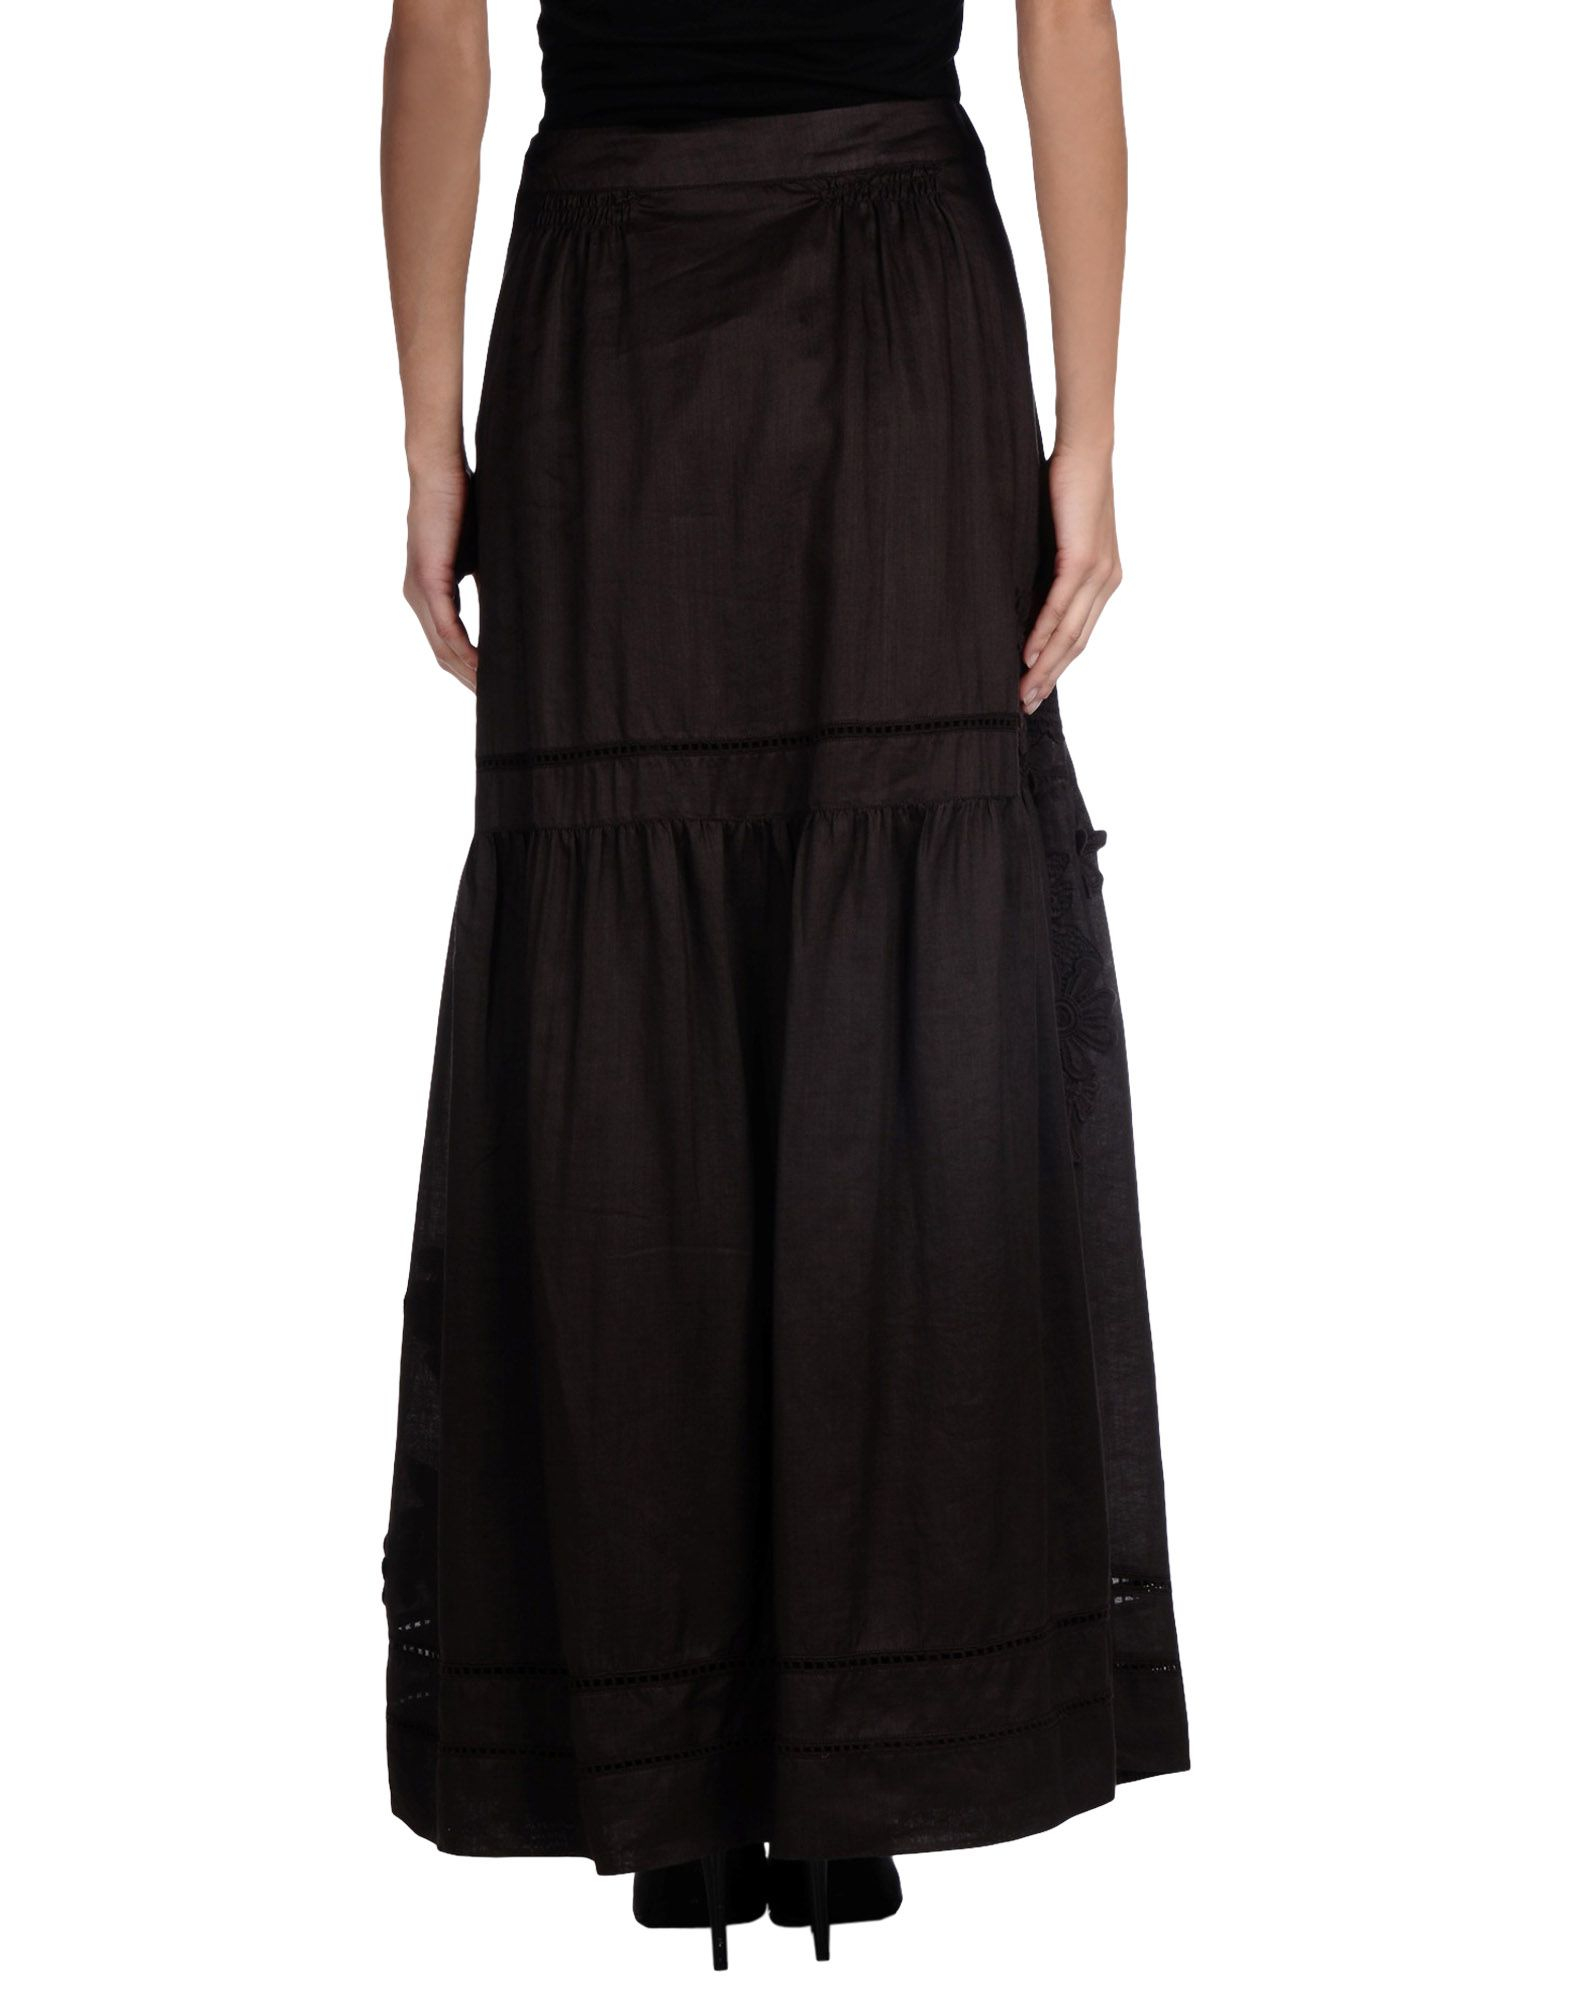 Ermanno scervino Long Skirt in Brown (Dark brown) | Lyst